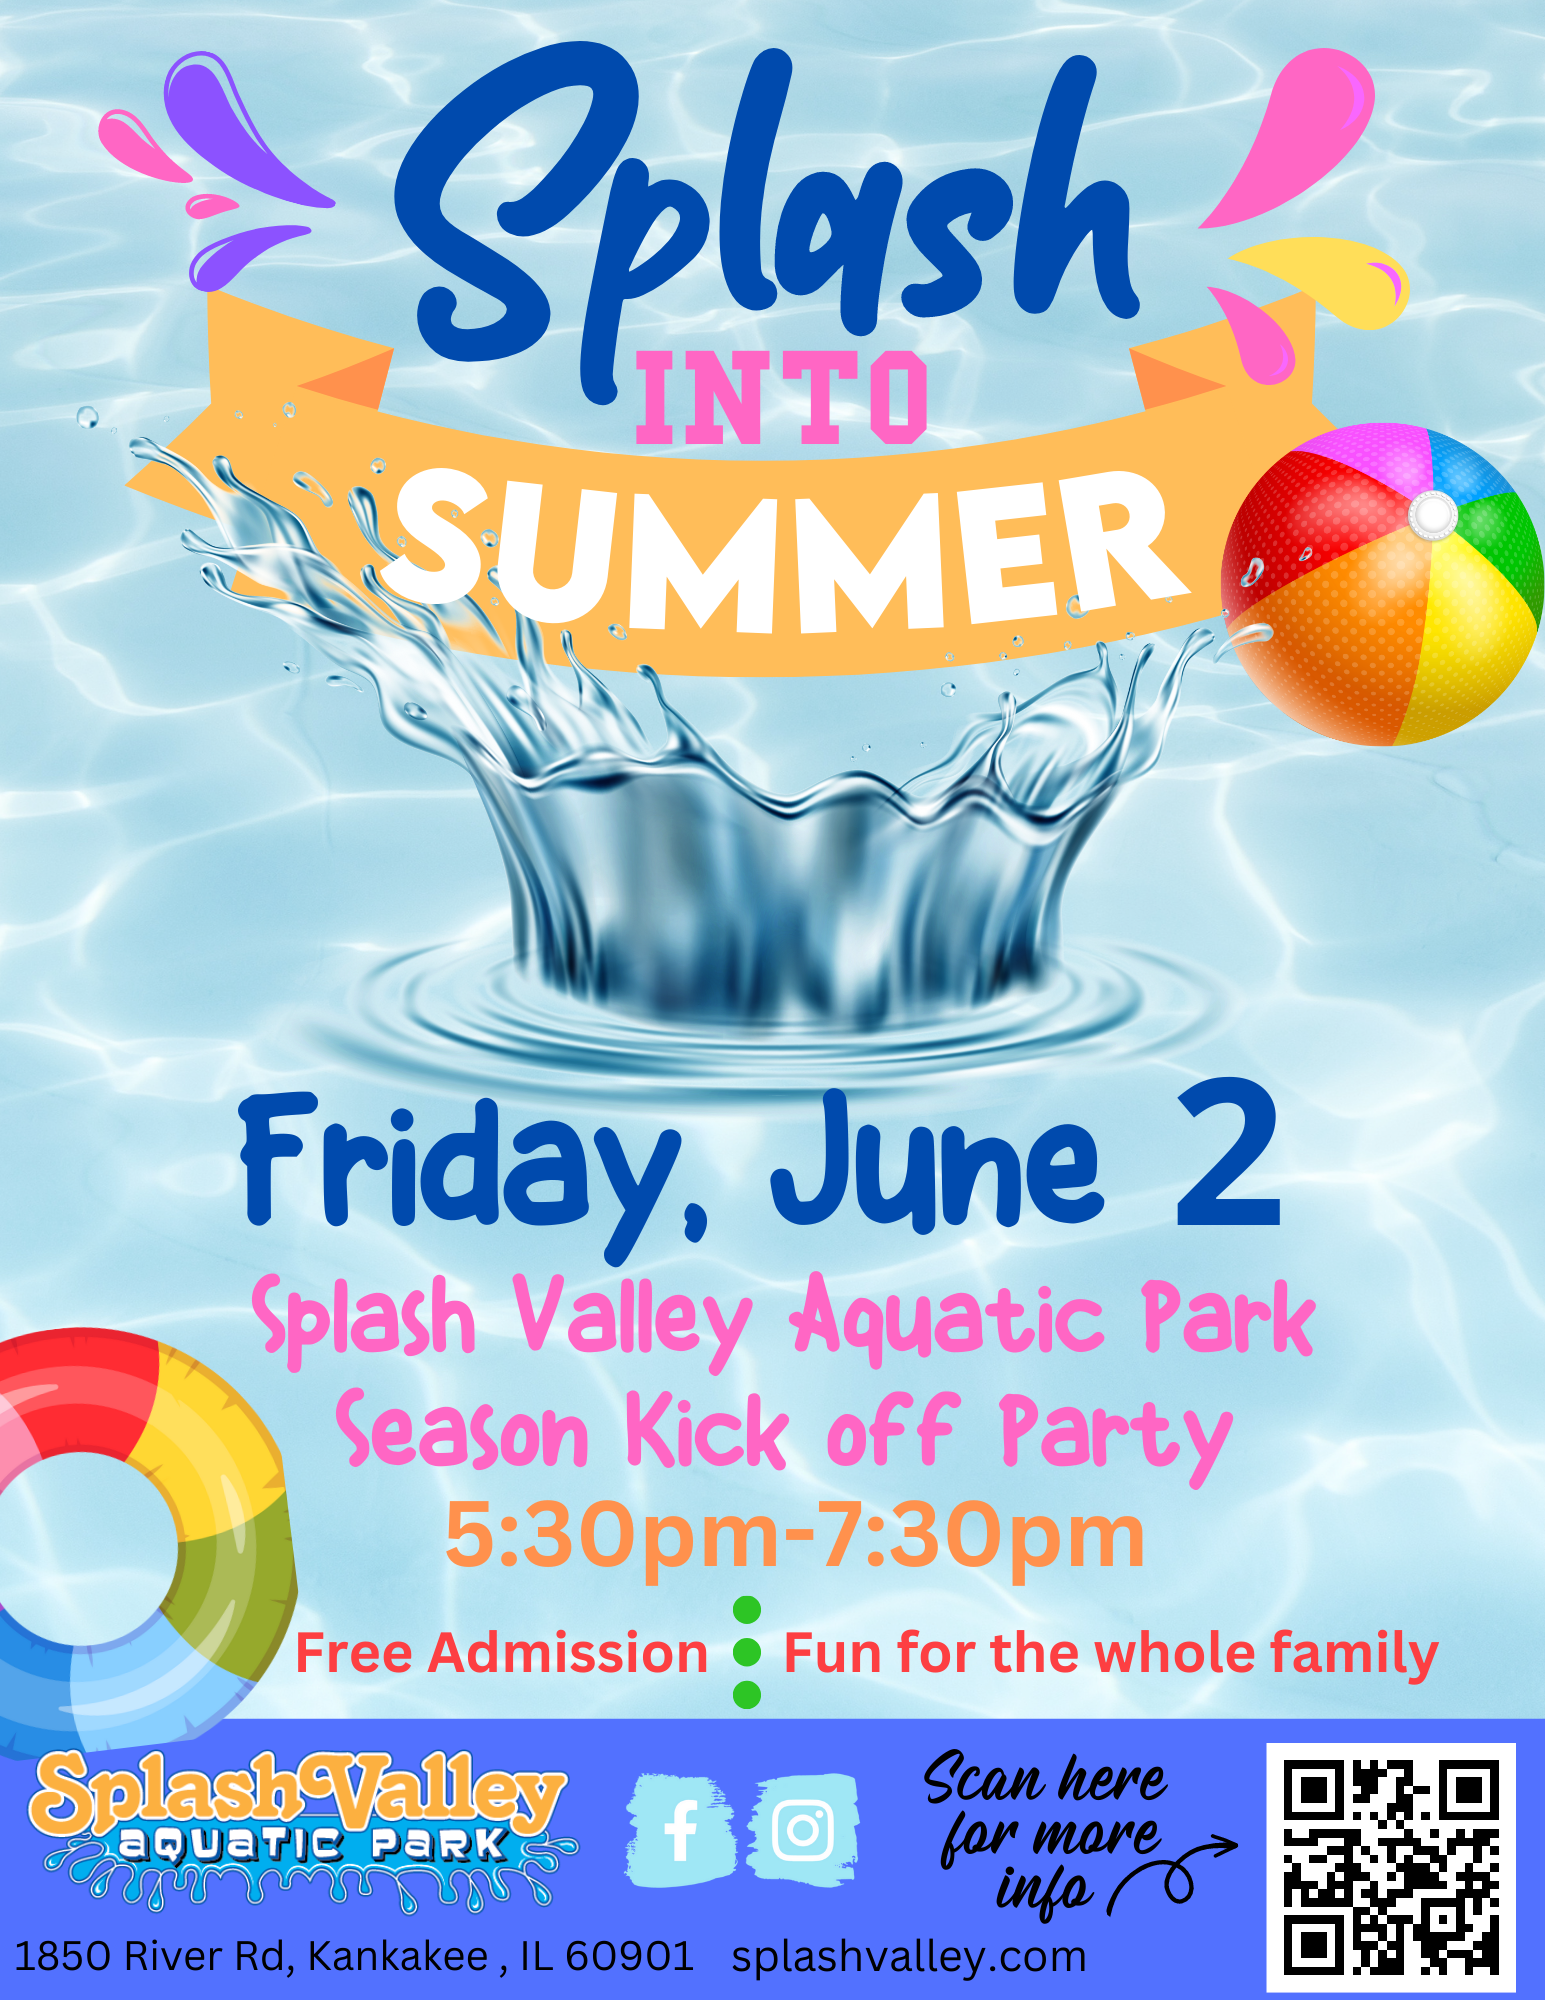 Splash Valley Aquatic Park's Season Kick Off Party